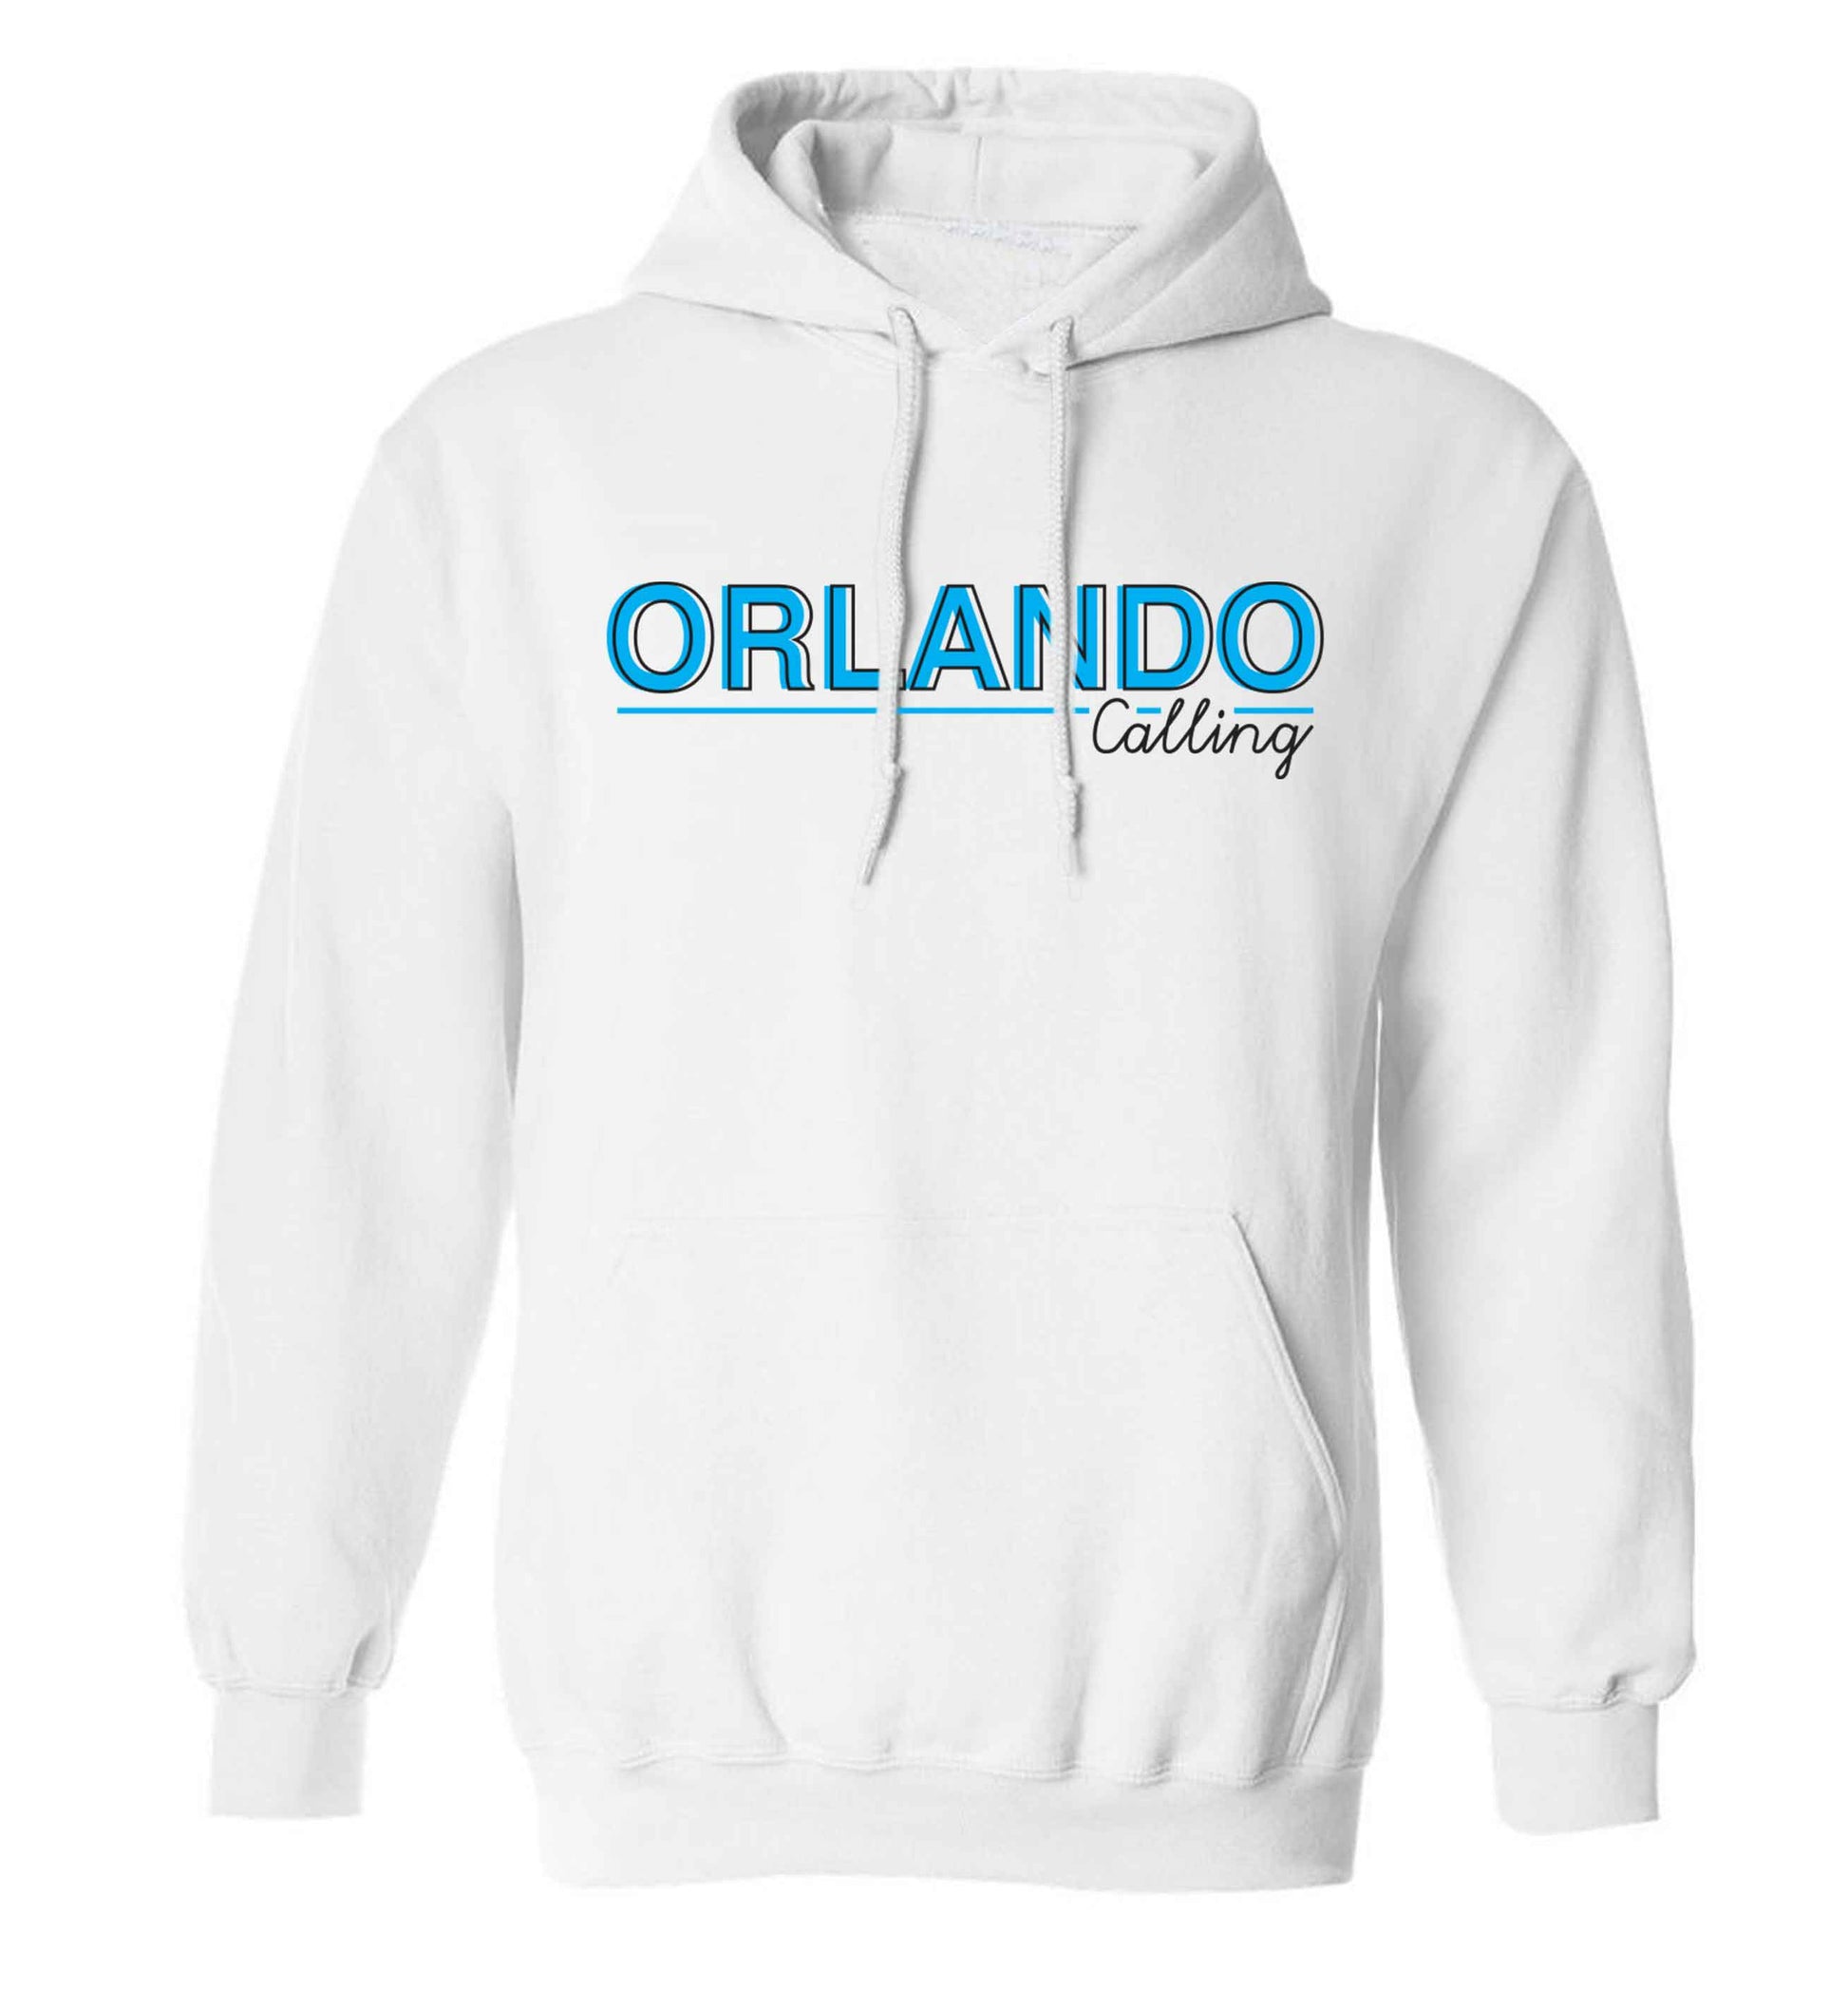 Orlando calling adults unisex white hoodie 2XL